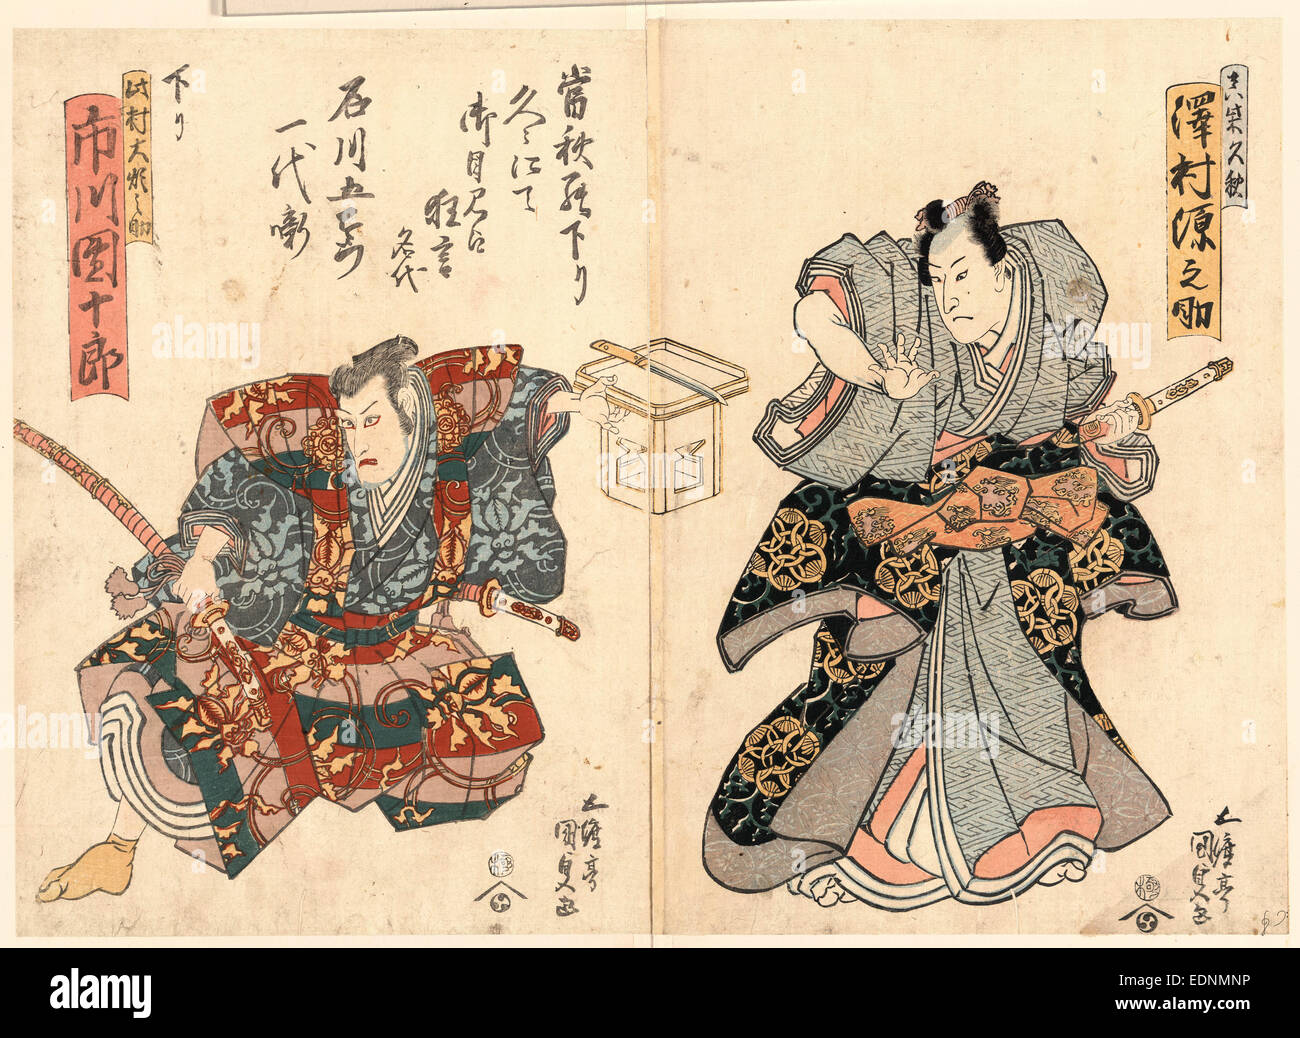 Ishikawa goemon ichidai banashi sawamura gennosuke ichikawa danjuro, The first tale of Ishikawa Goemon., Utagawa, Toyokuni, 1786-1865, artist, [between 1825 and 1830], 1 print (2 sheets) : woodcut, color., Print shows two actors in the role of Ishikawa Goemon. Stock Photo